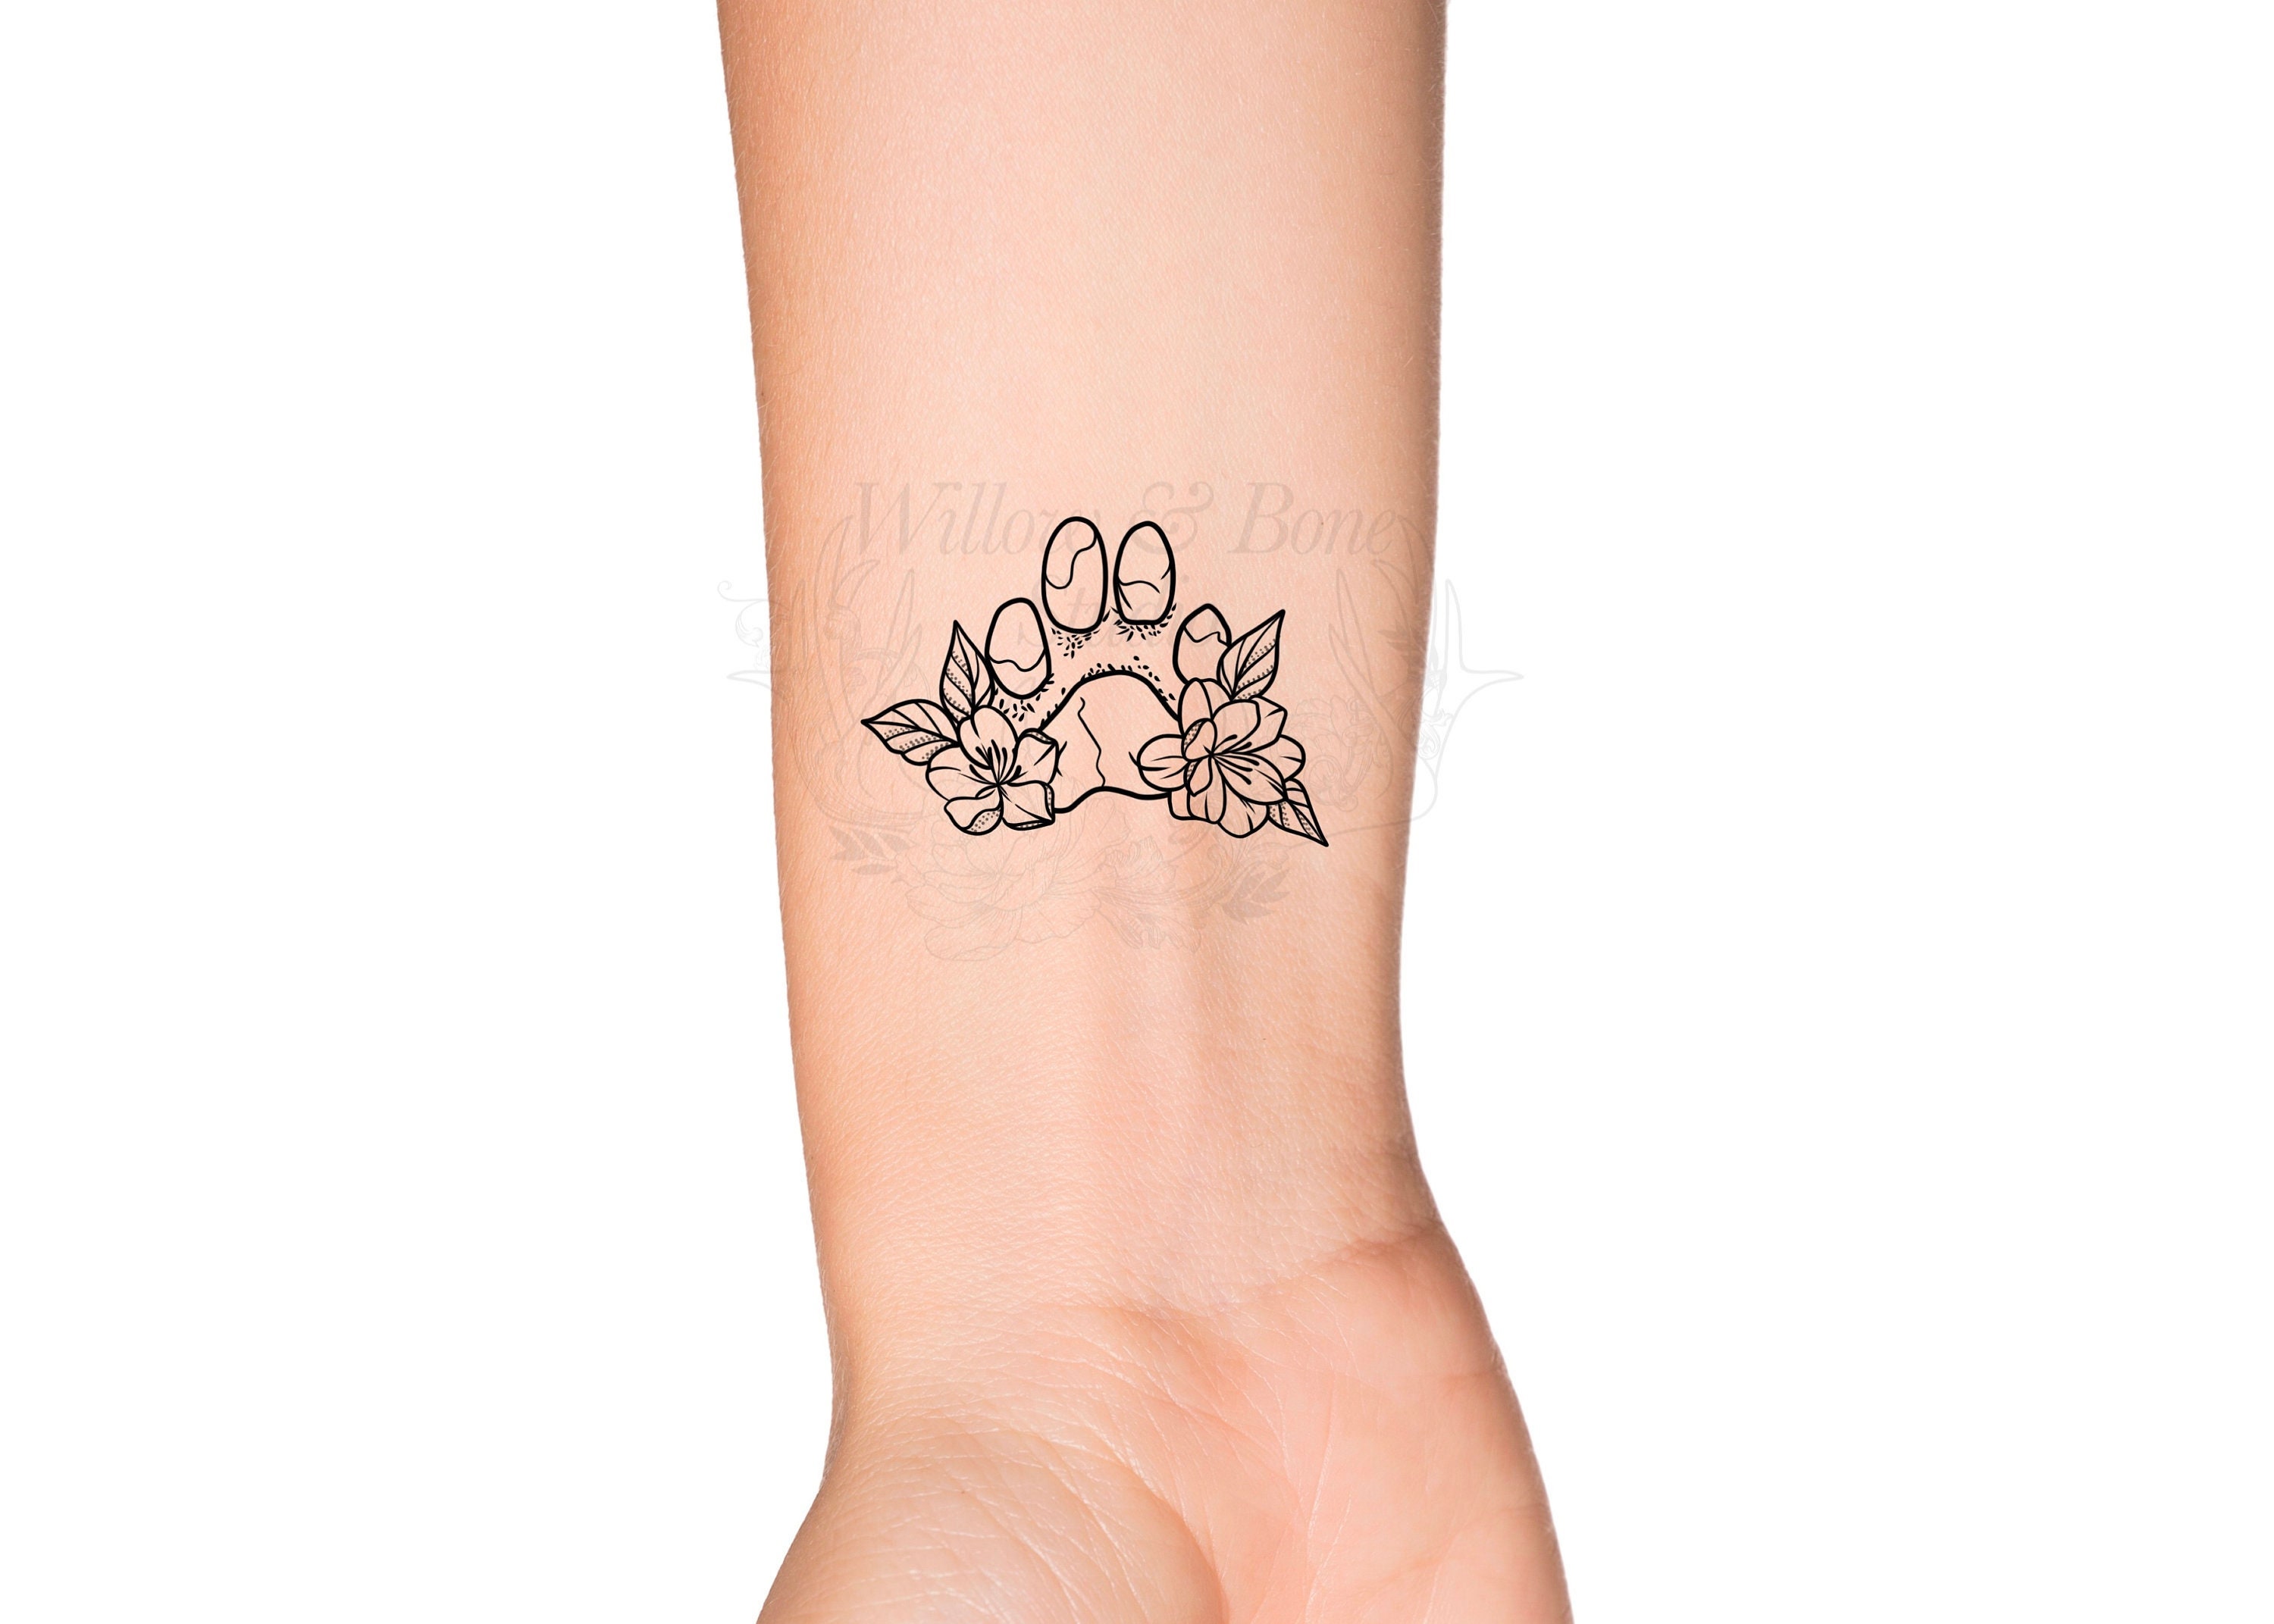 Buy Husky Temporary Fake Tattoo Sticker set of 2 Online in India - Etsy